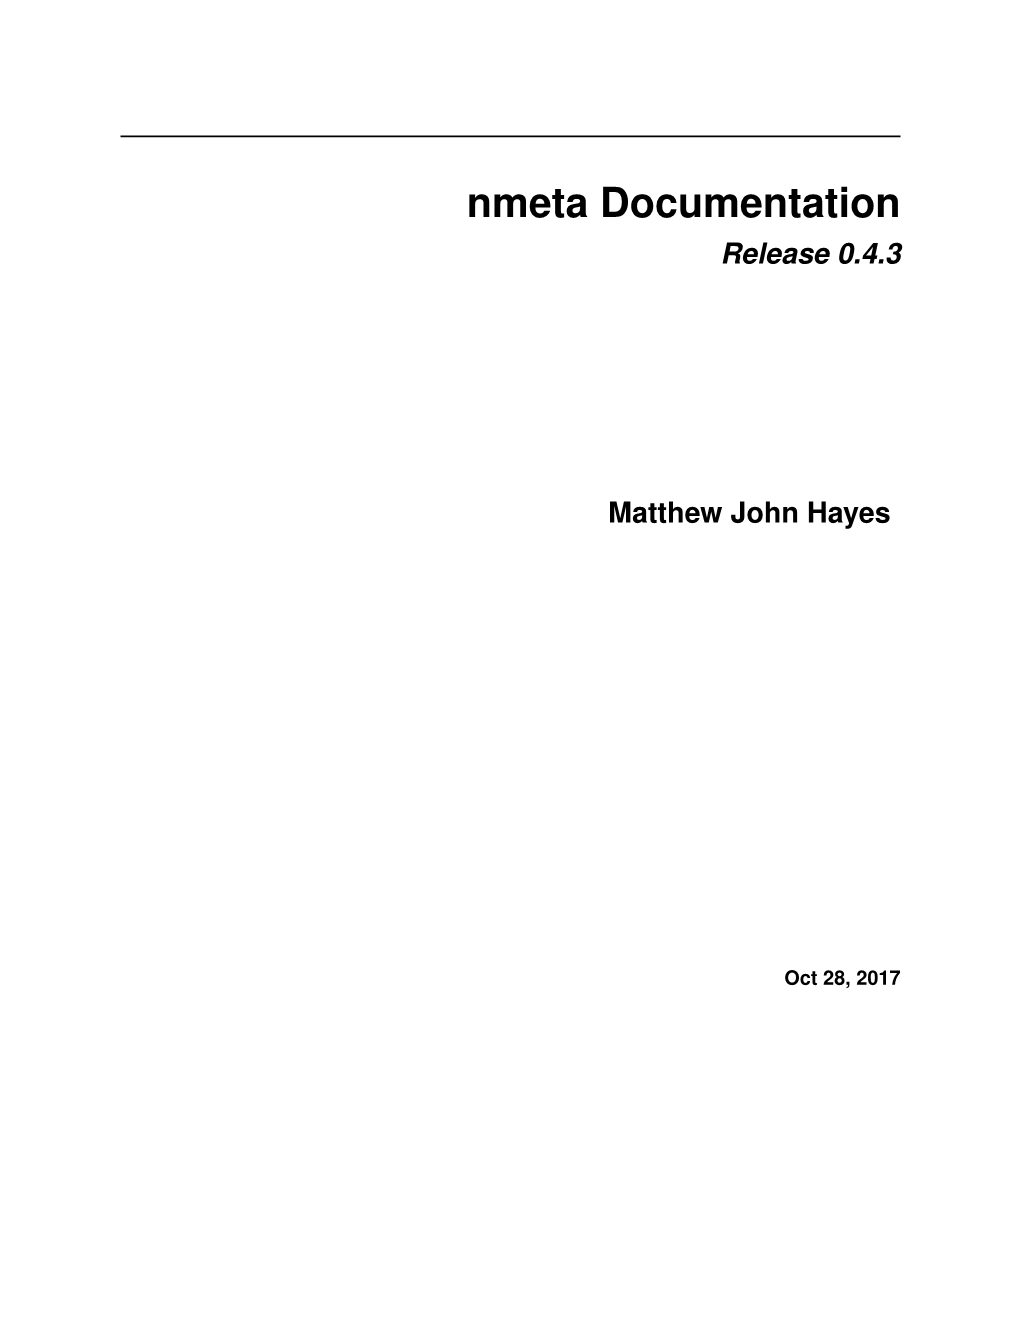 Nmeta Documentation Release 0.4.3